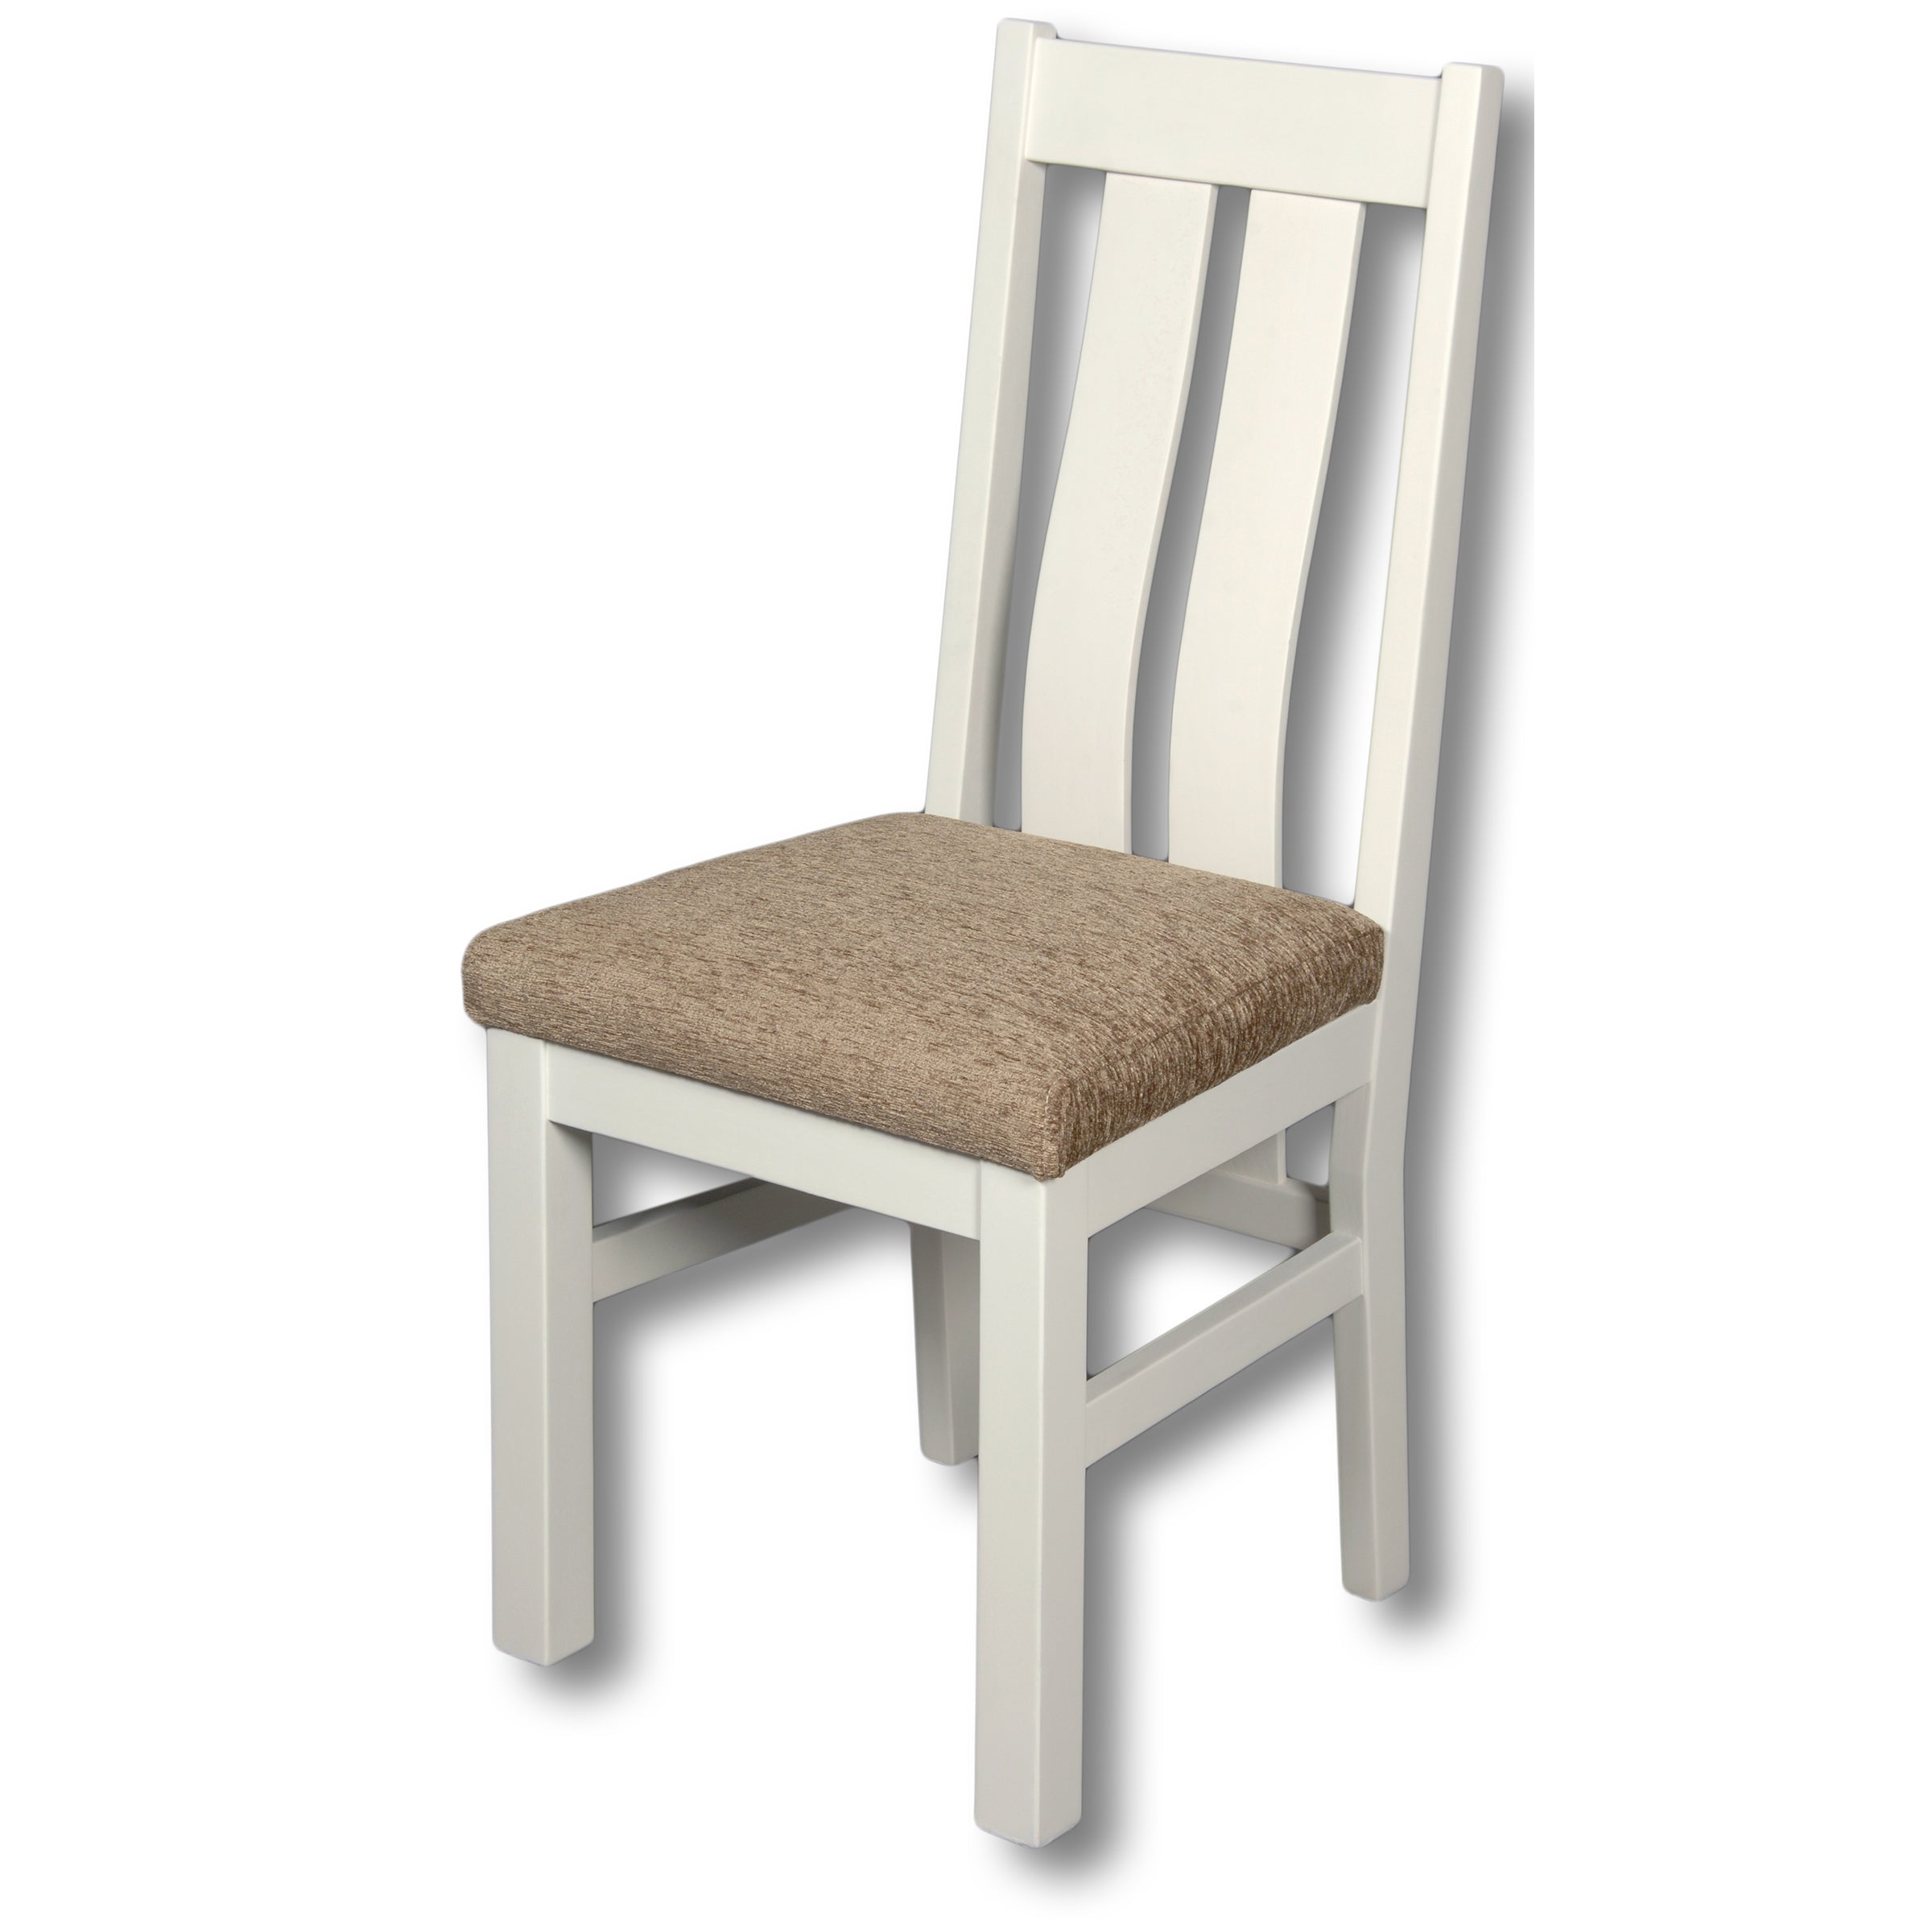 Elizabeth Twin Slat White Painted Chair